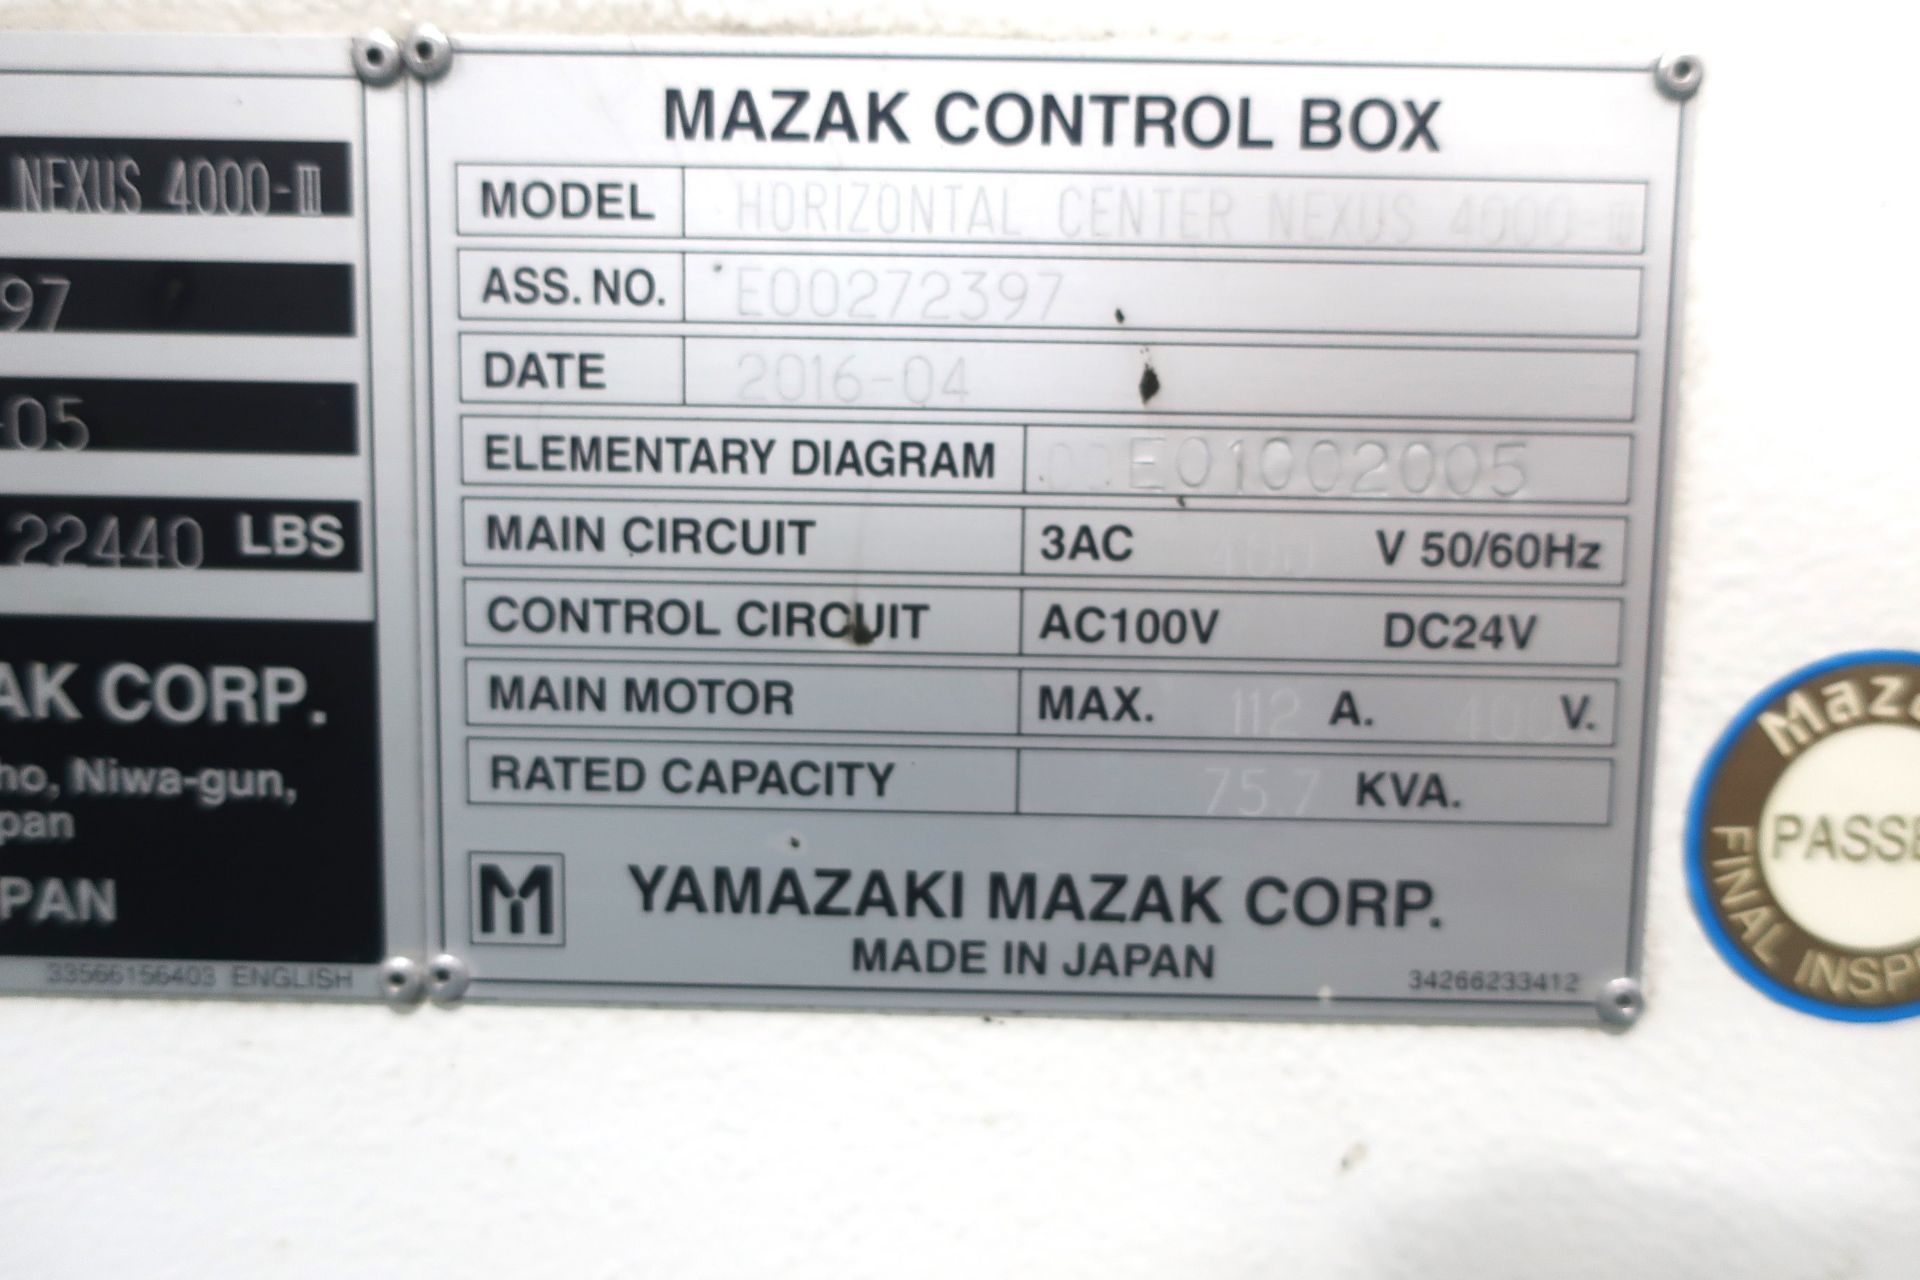 16"X16" MAZAK HCN NEXUS 4000-III 4-AXIS PRECISION HORIZONTAL MACHINING CENTER, S/N 272397 - Image 16 of 16